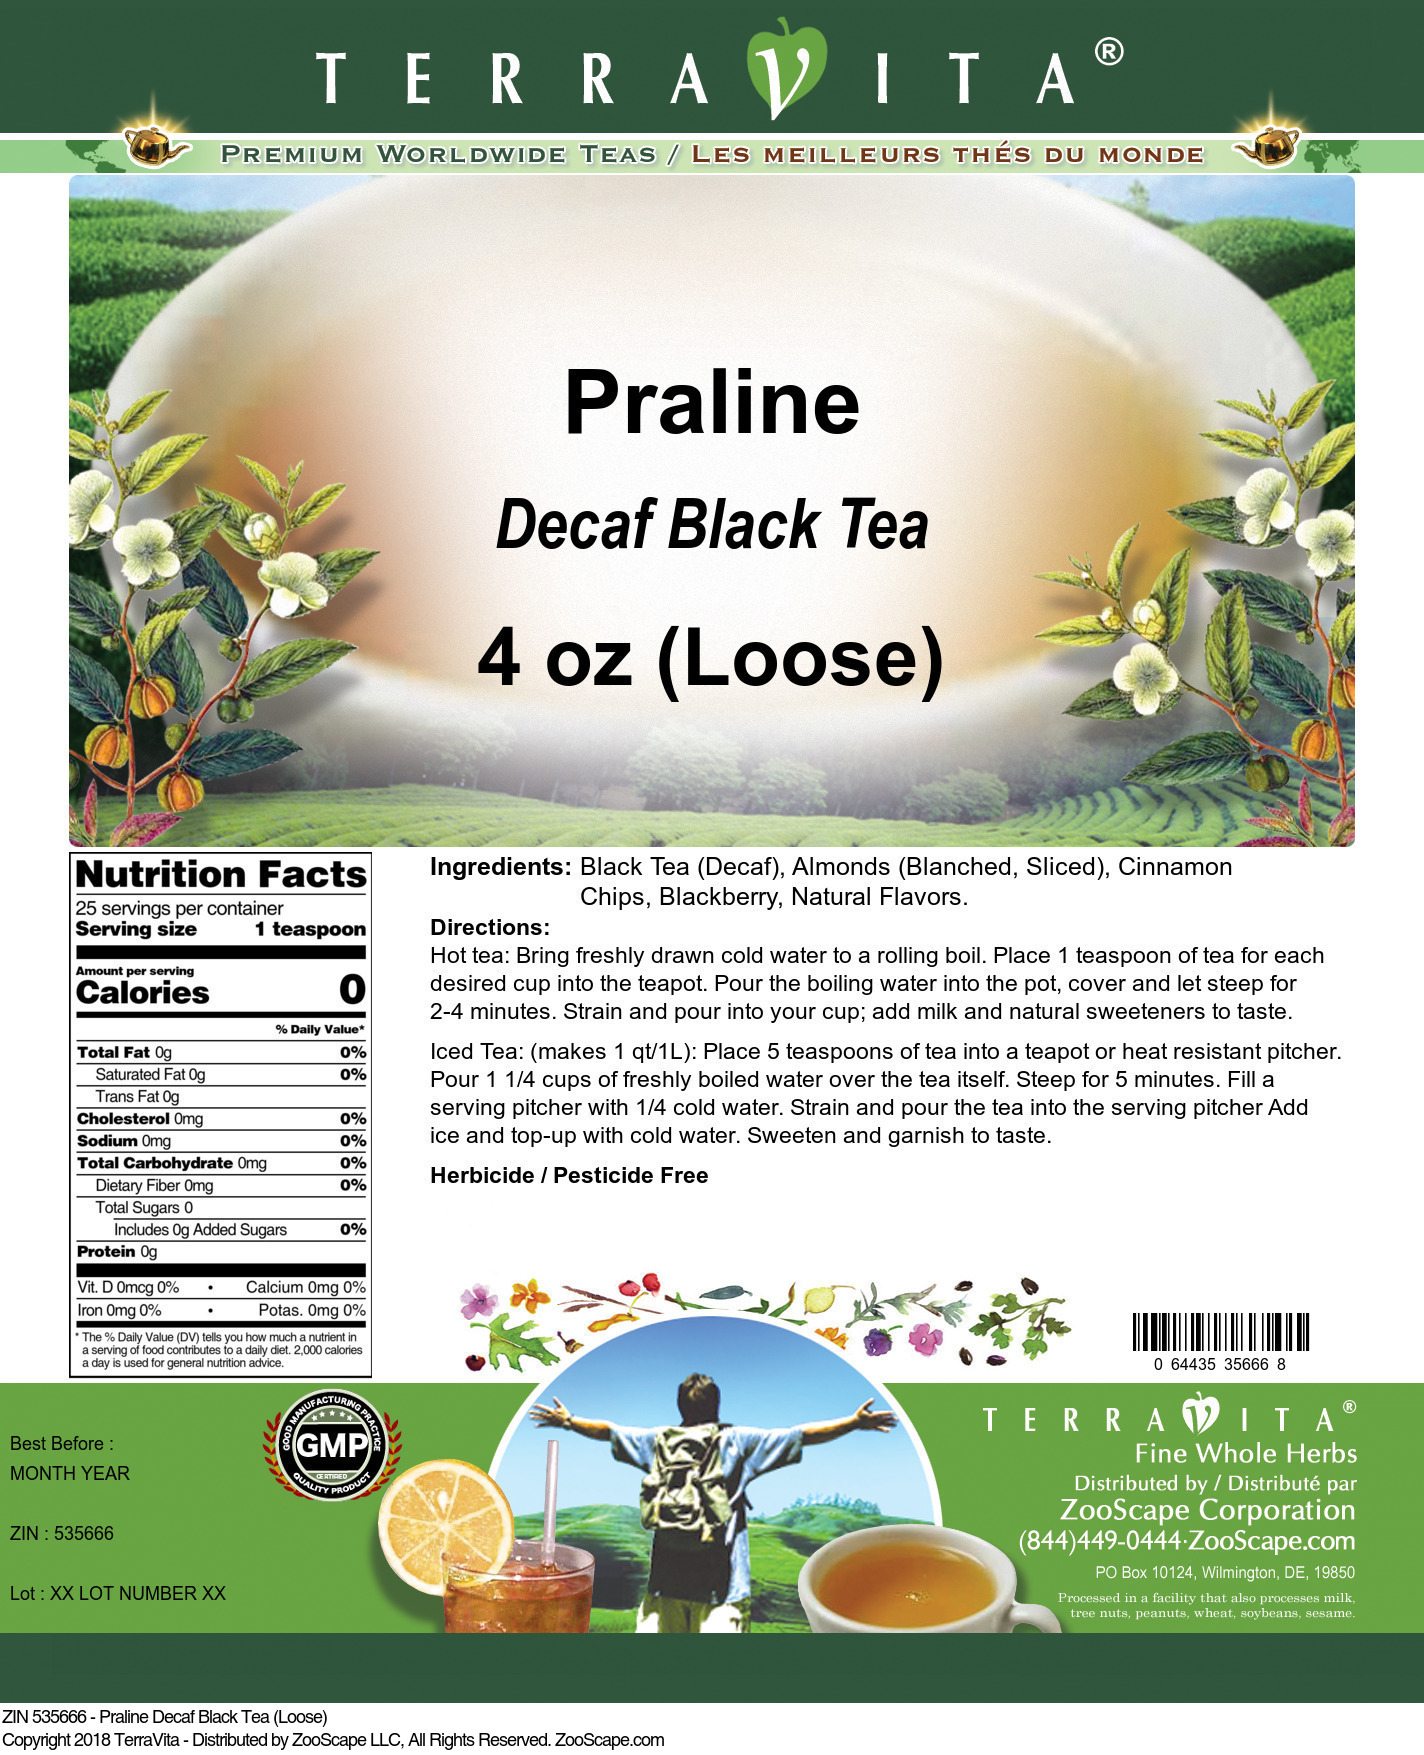 Praline Decaf Black Tea (Loose) - Label